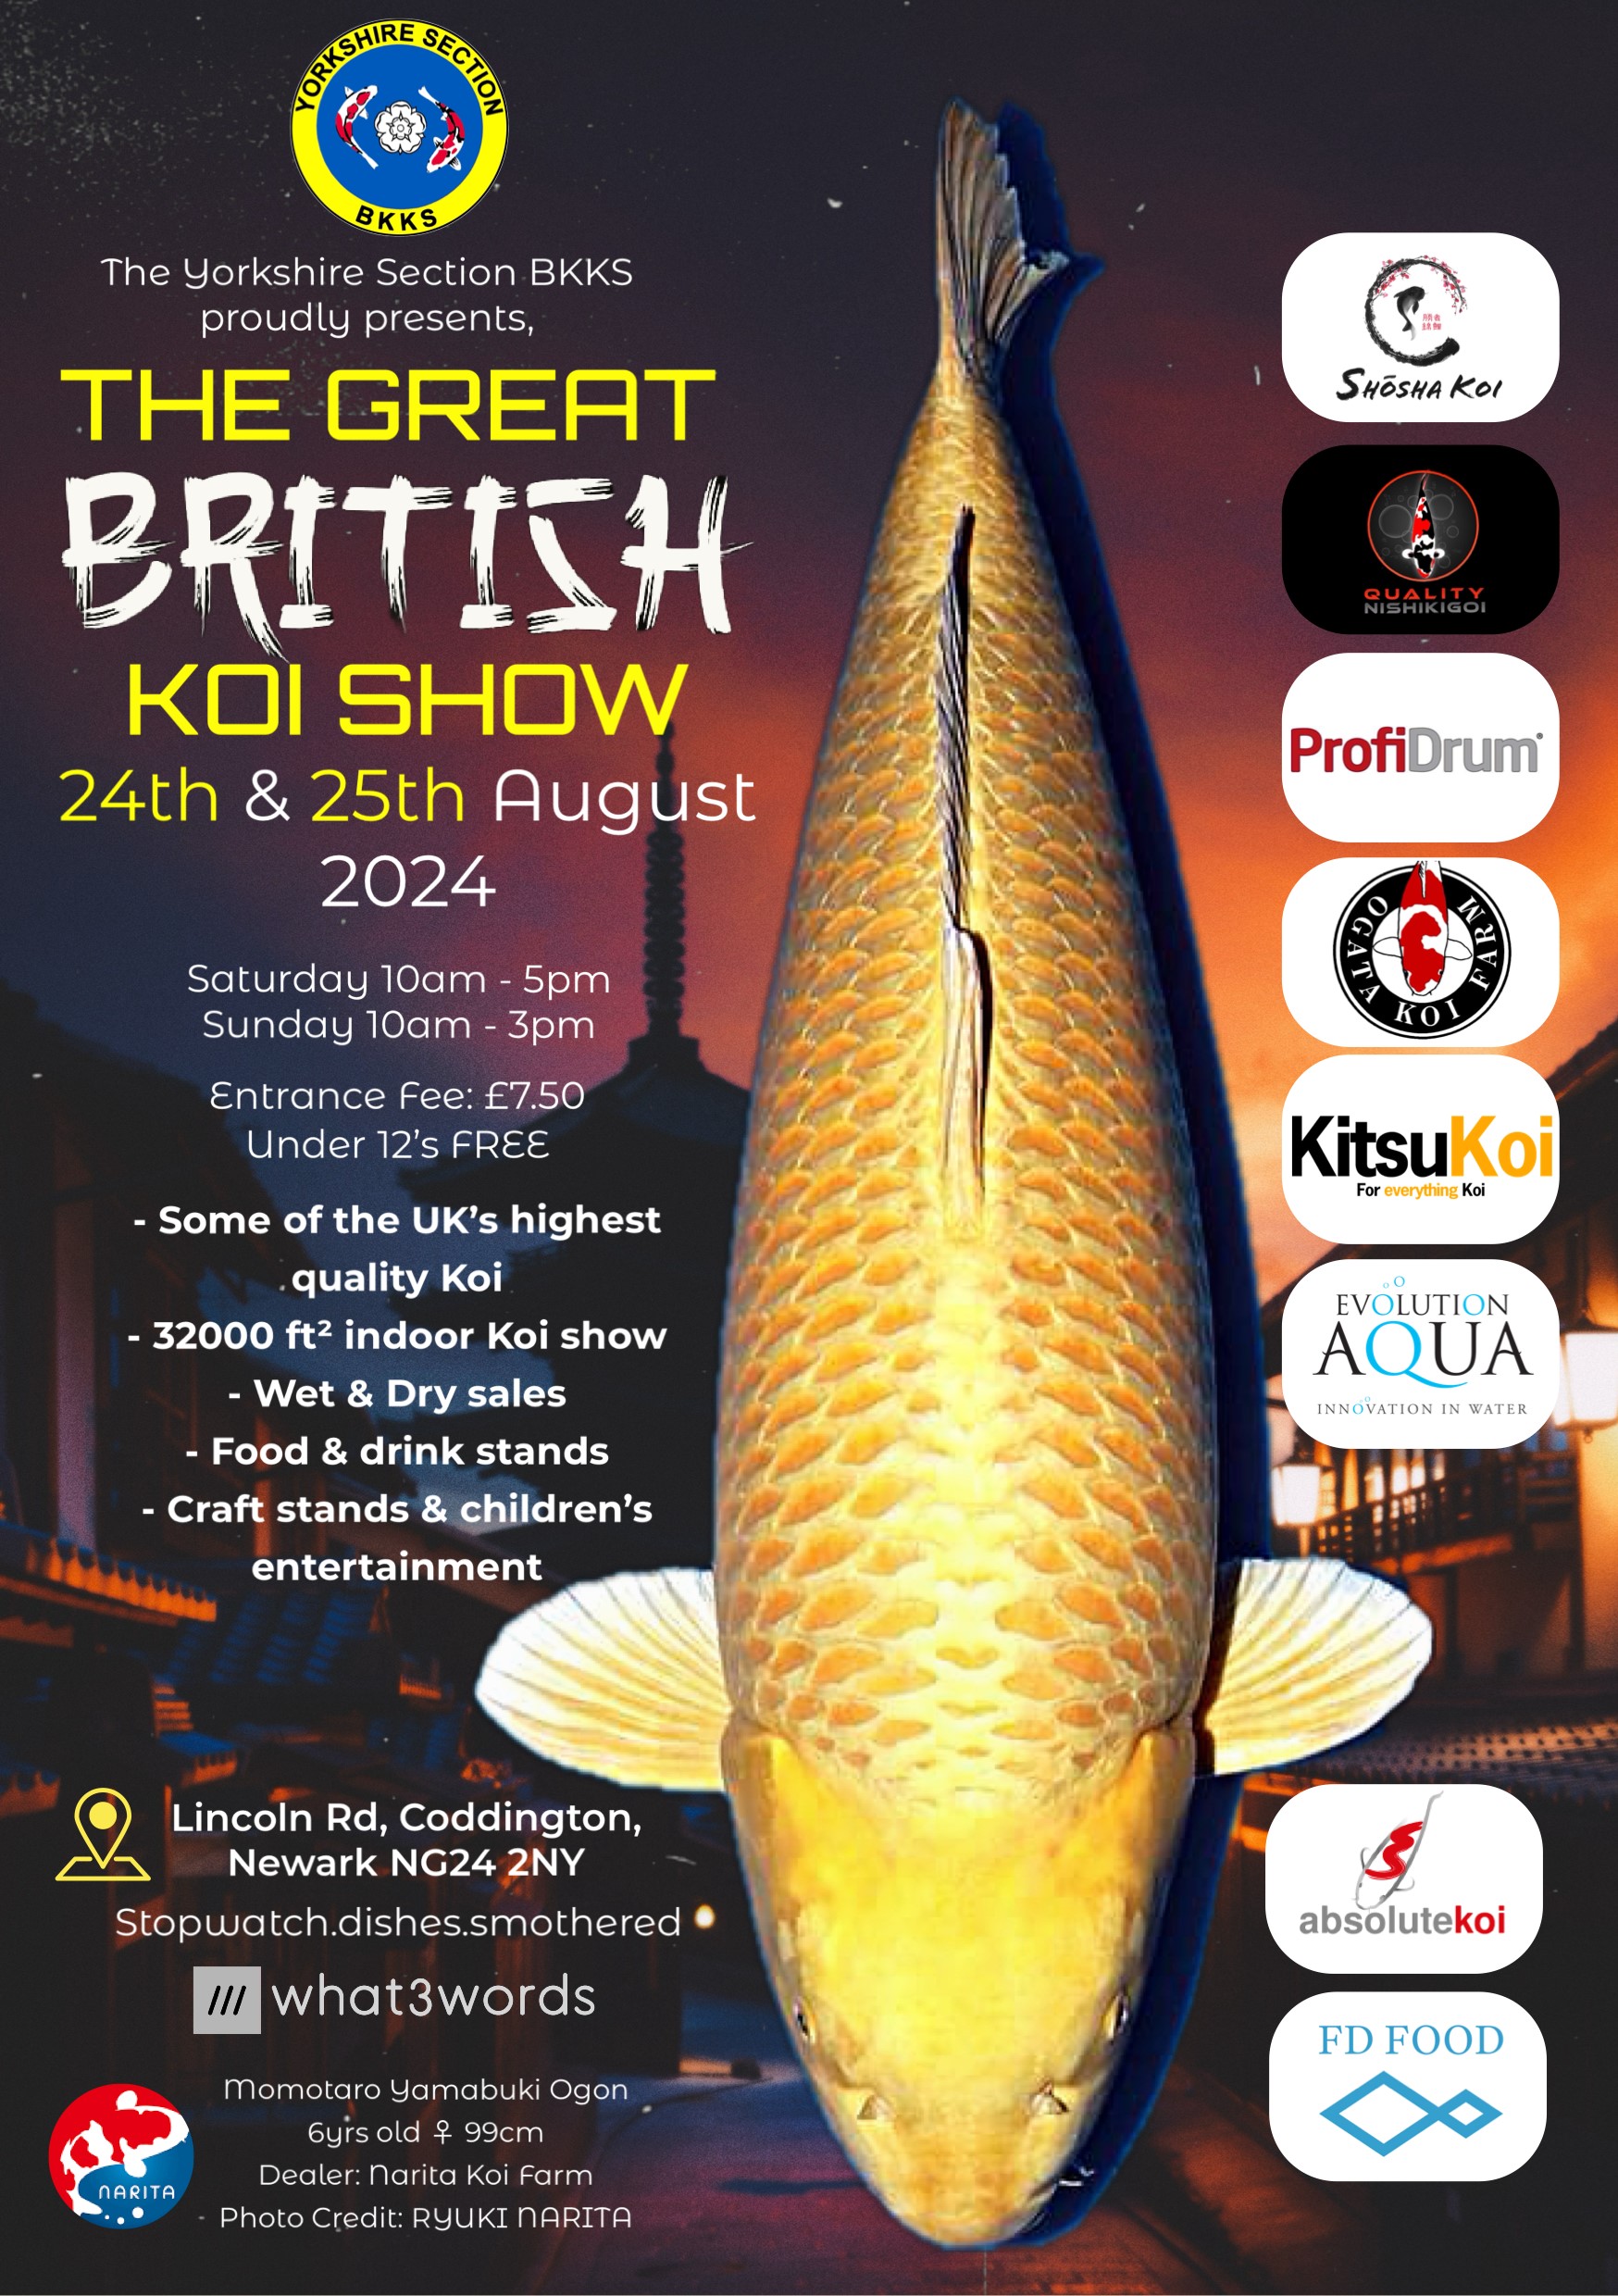 The Great British Koi Show 2024